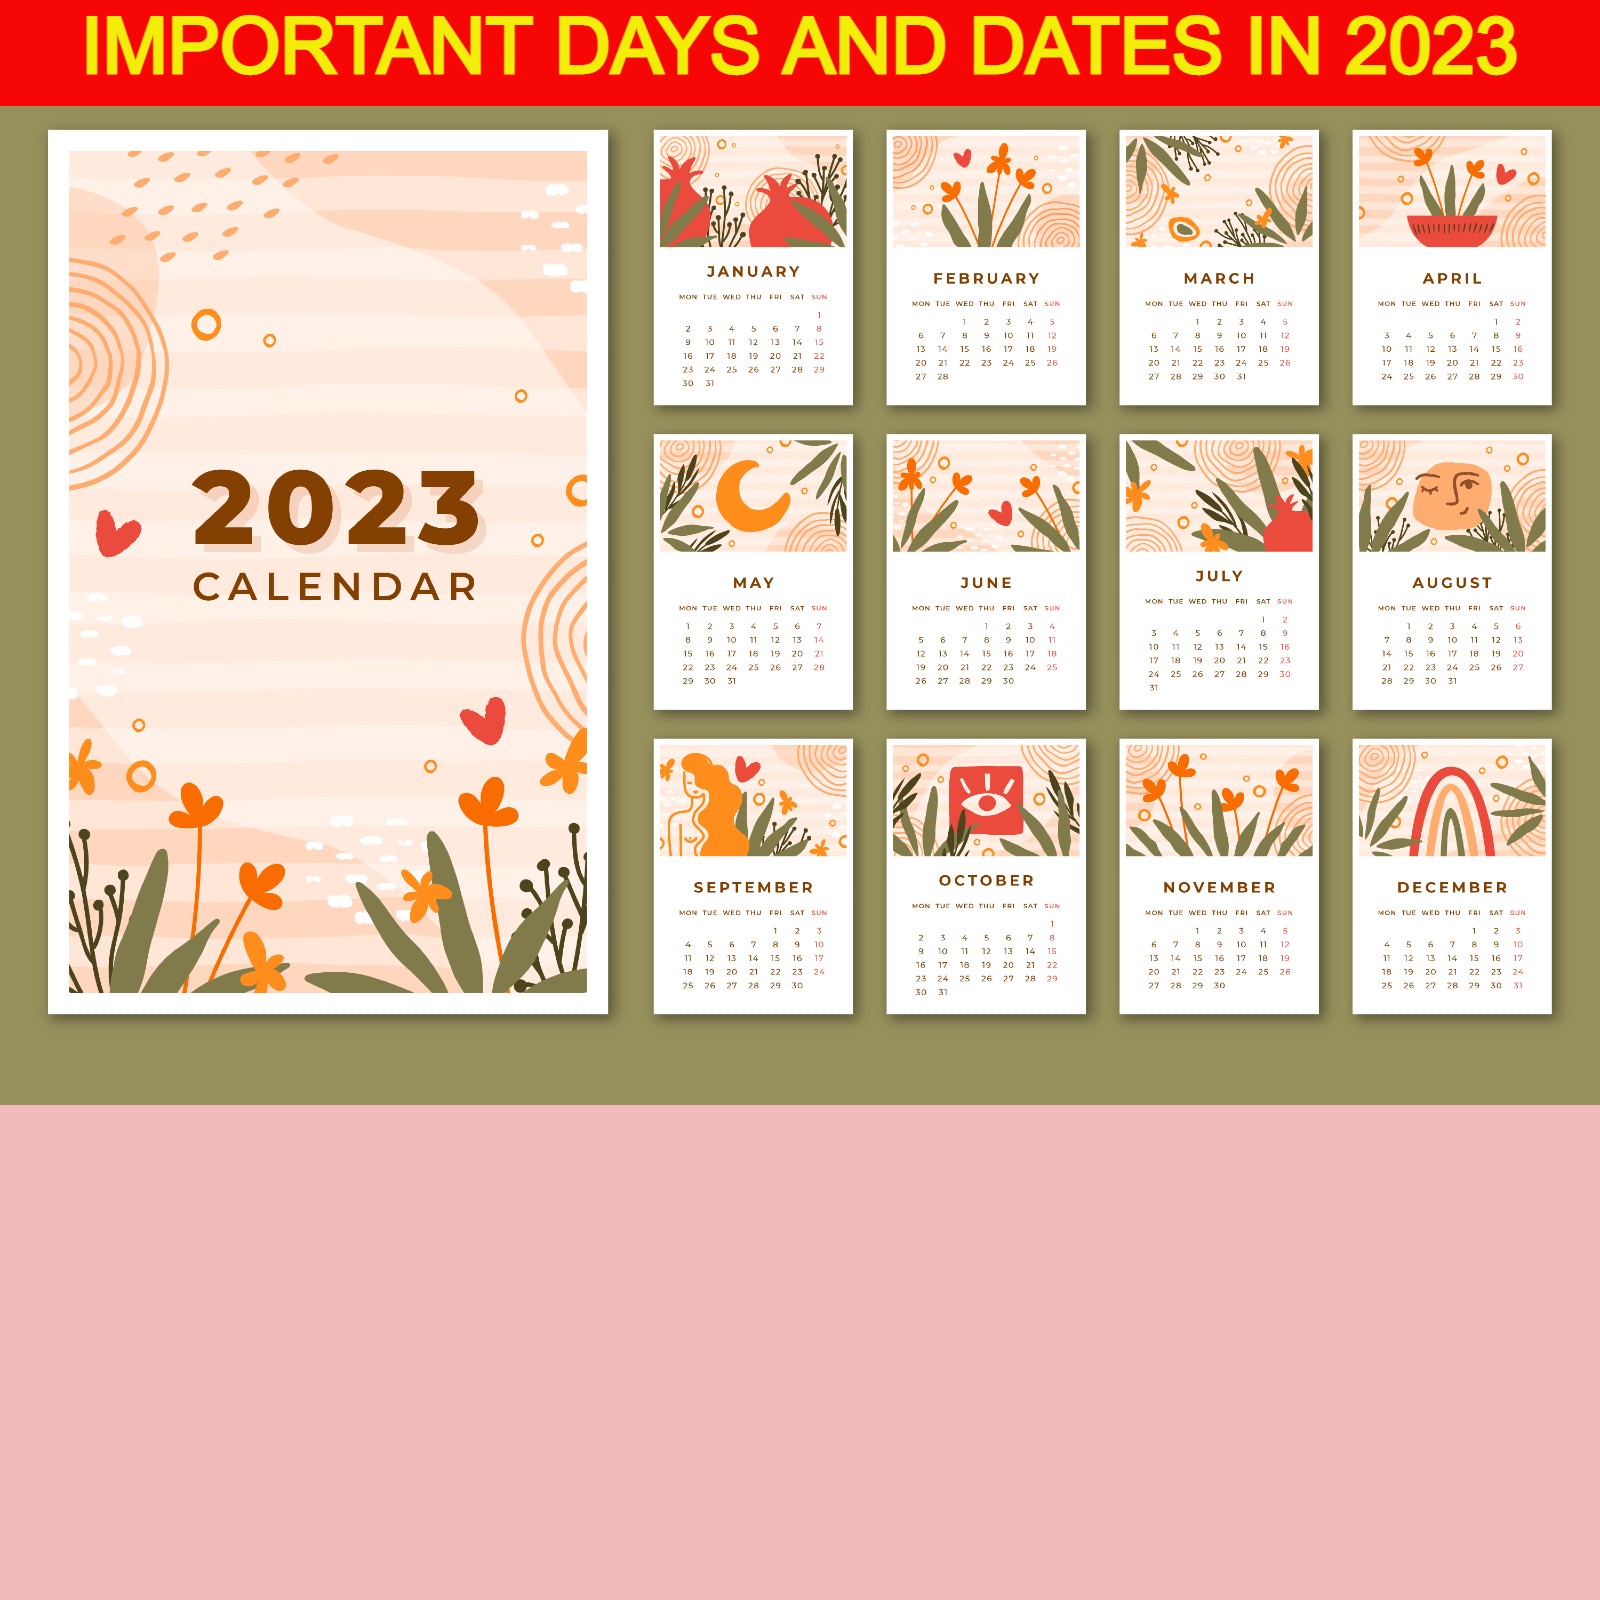 No Disposable Cup Day 2023 - Awareness Days Events Calendar 2024